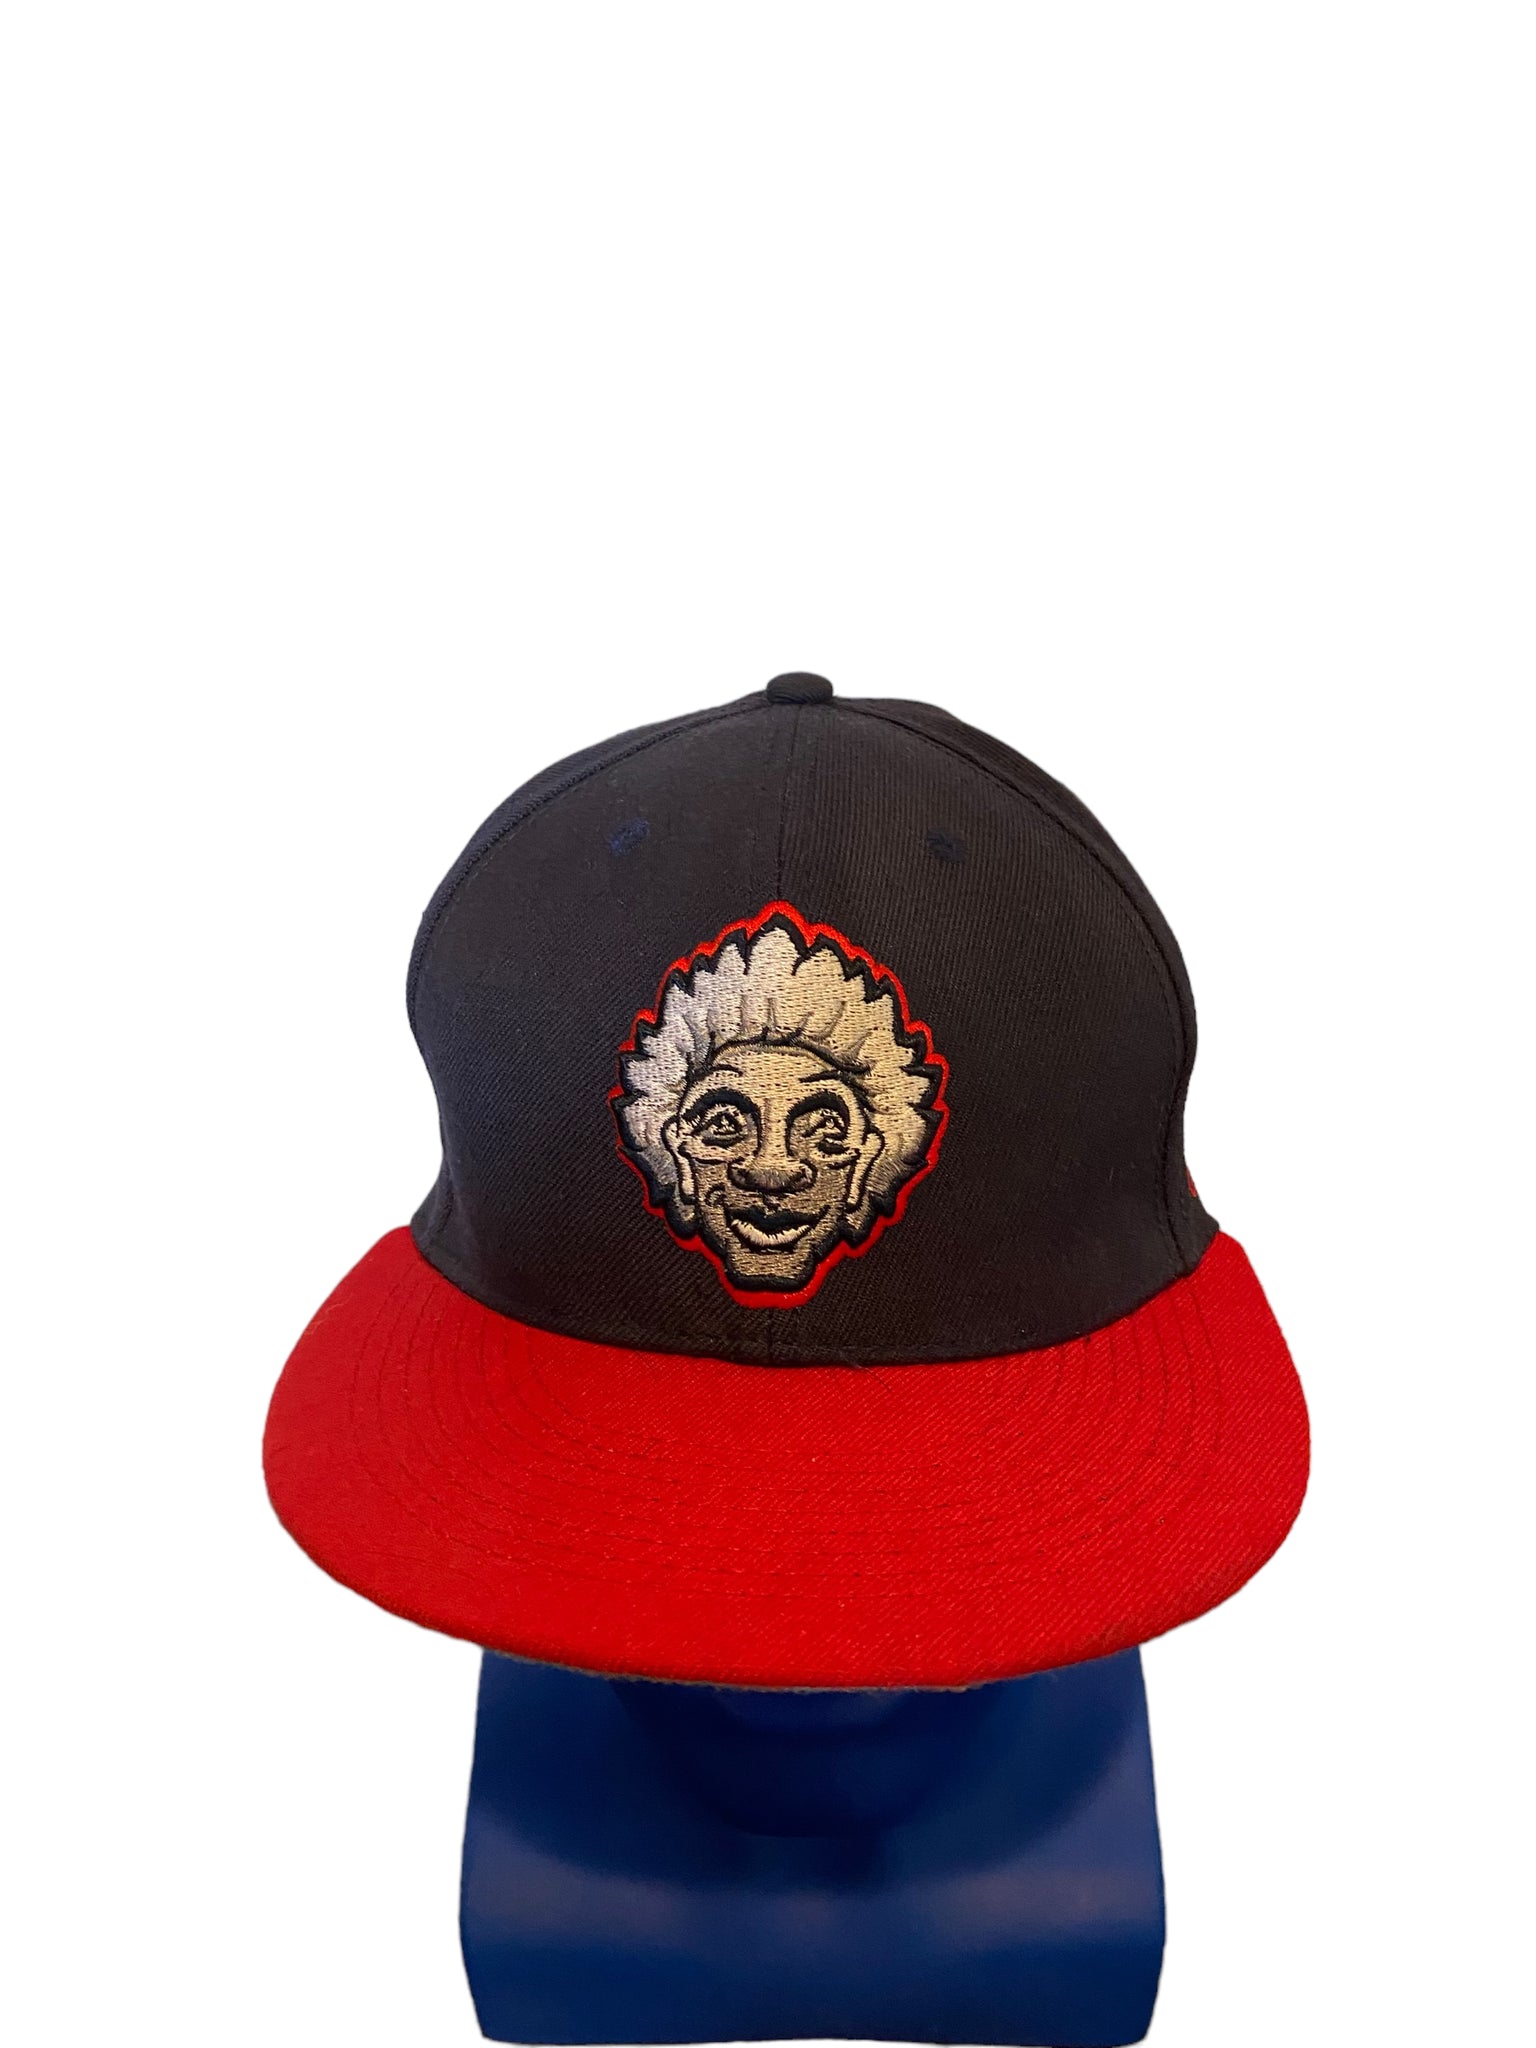 baseballism jobu logo embroidered fitted size 7 hat